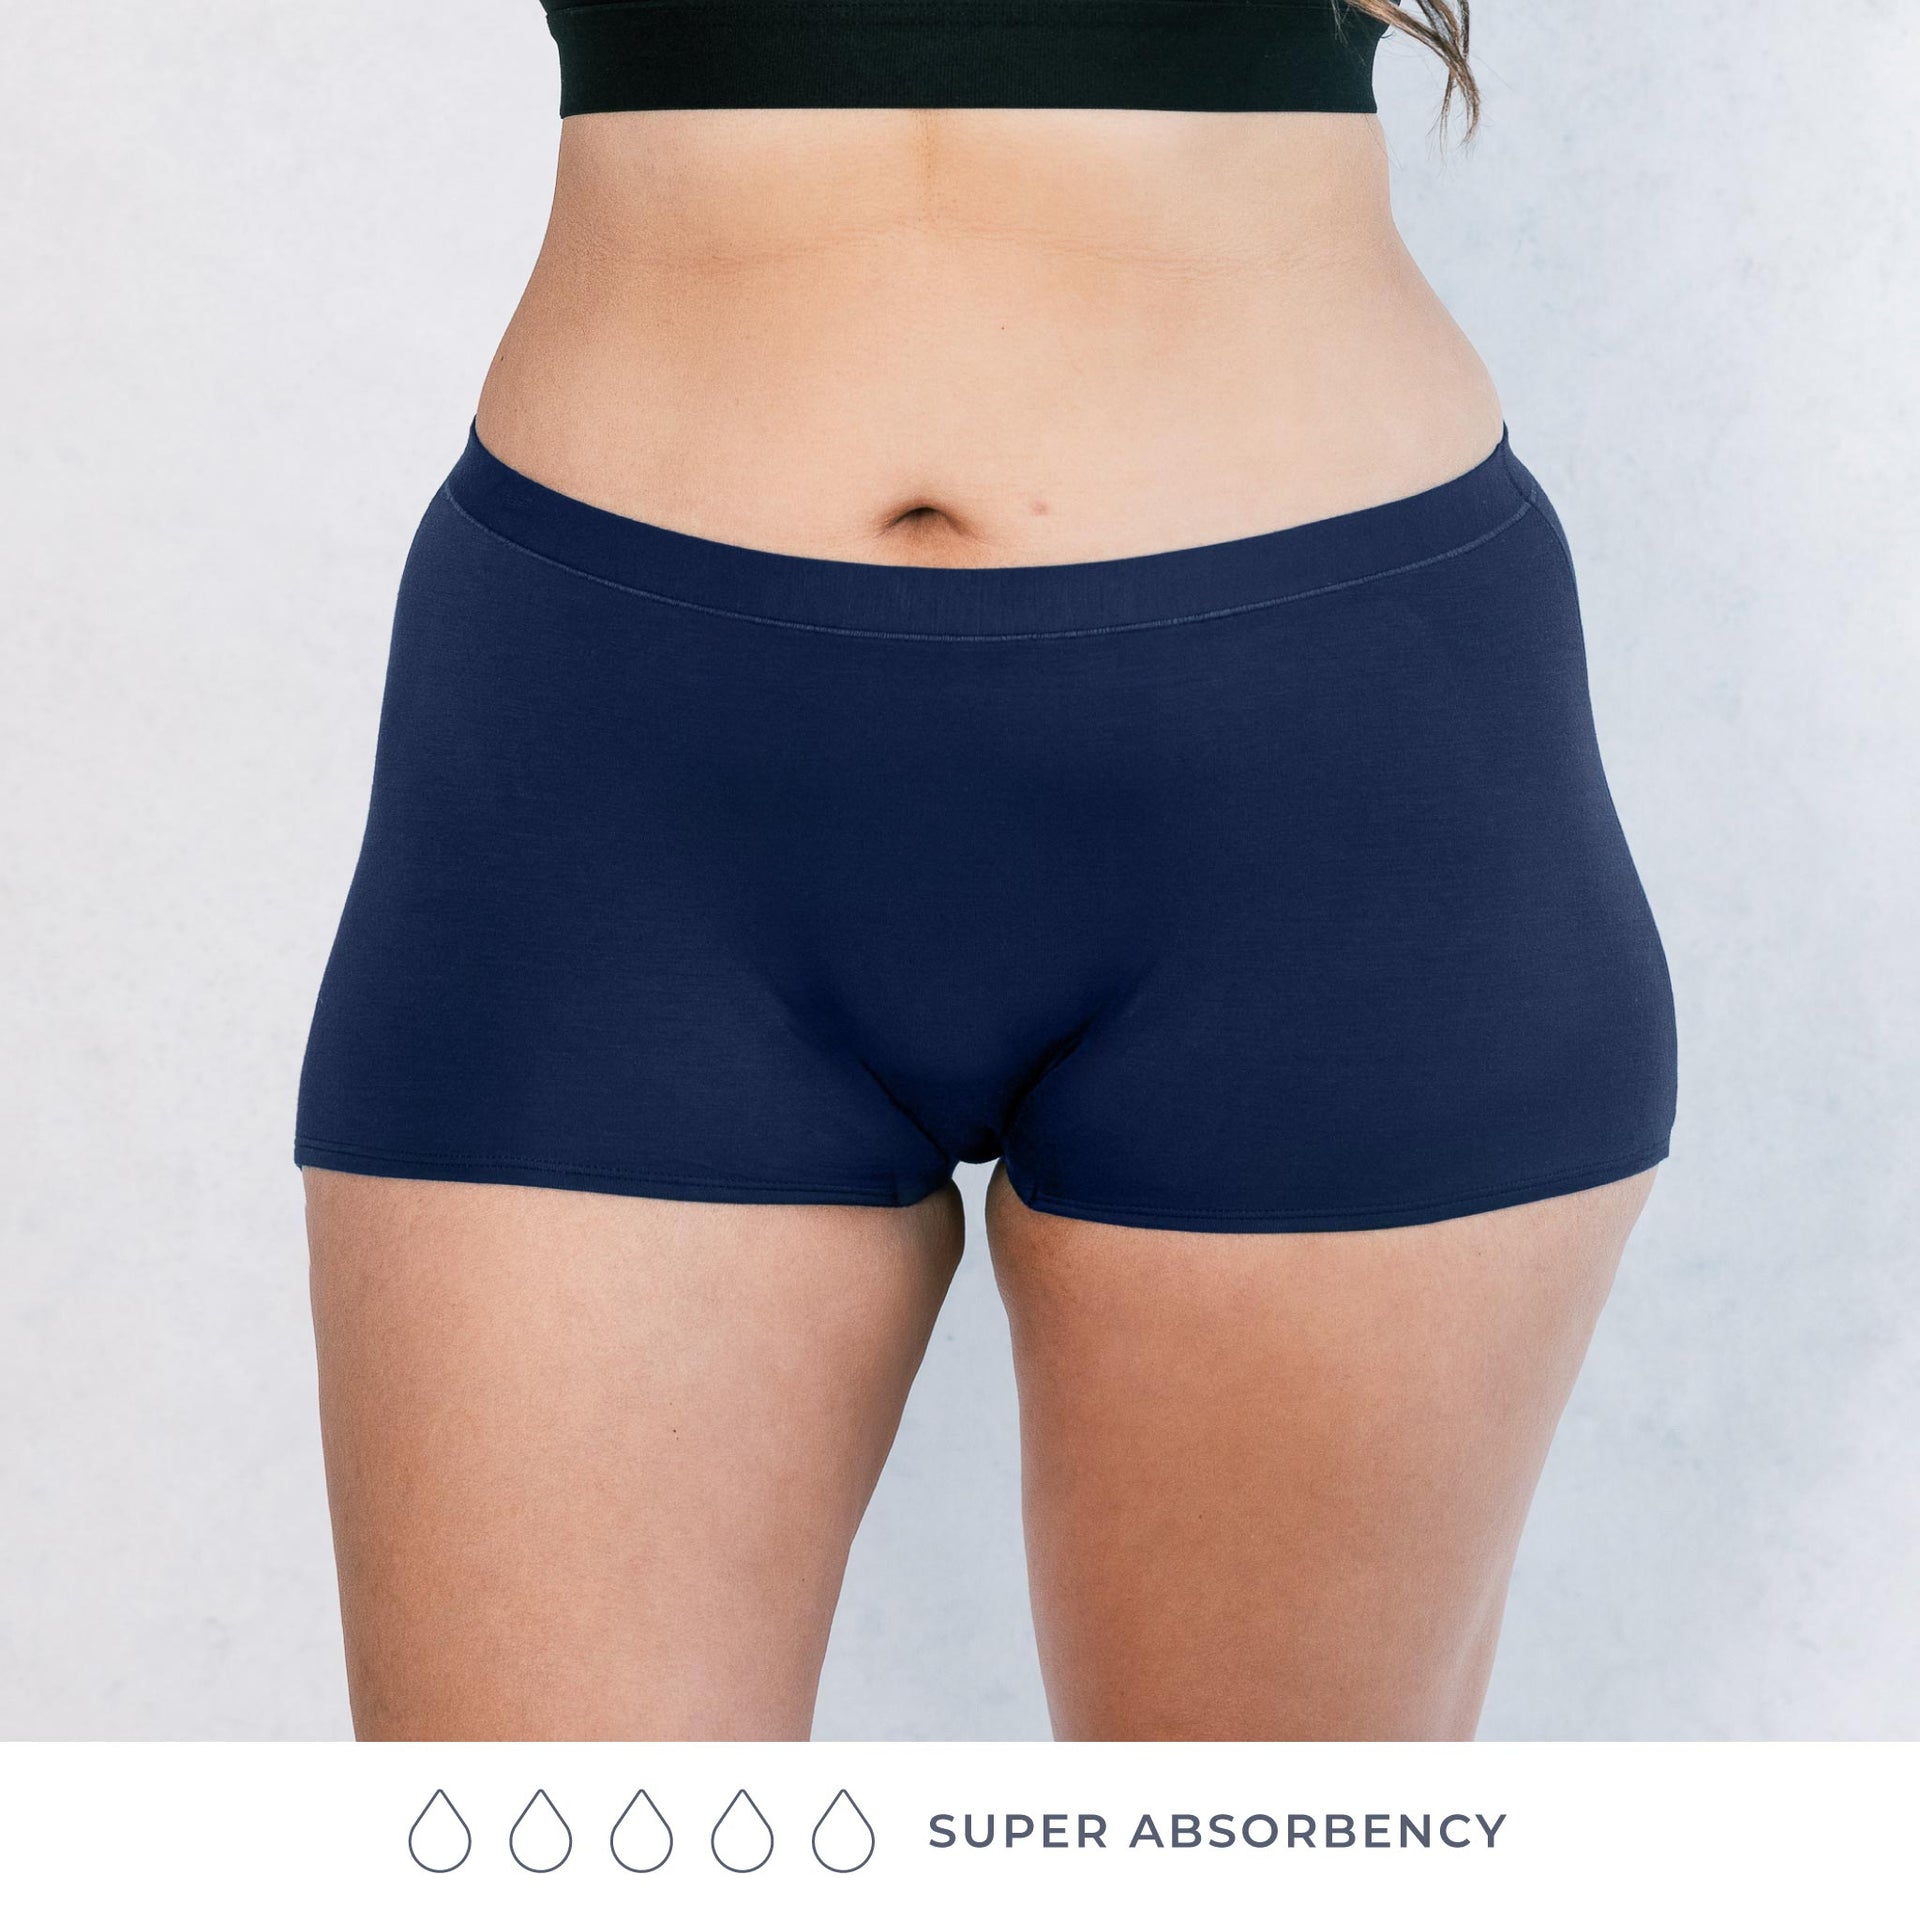 Leak Proof Sleep Short - Super Absorbency, Period Underwear, Saalt